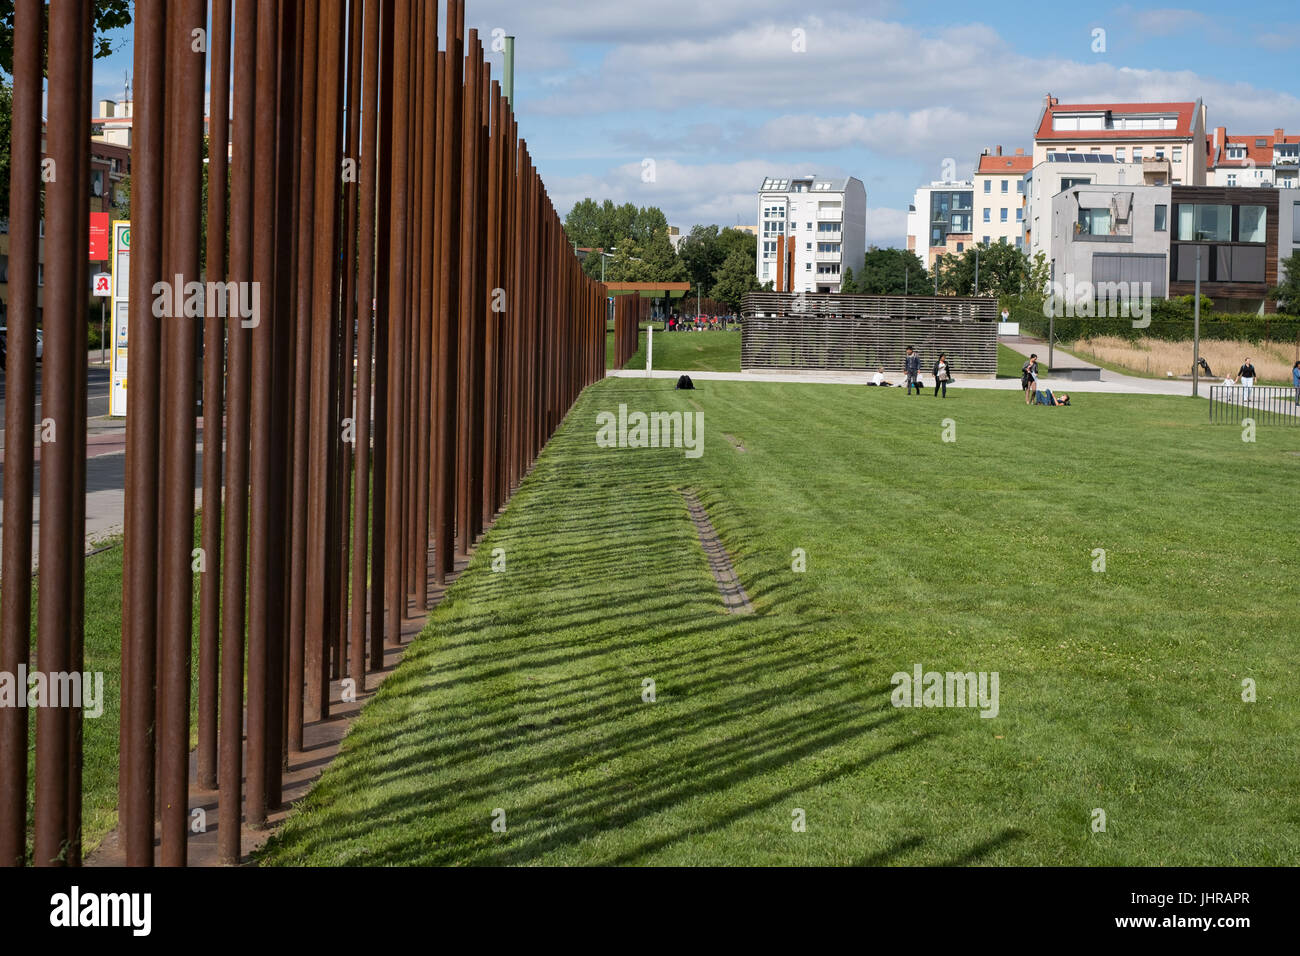 Berlin, Germany - July 13, 2017: Remains of the Berlin Wall / Berlin Wall memorial at Bernauer Strasse in Berlin, Germany. Stock Photo